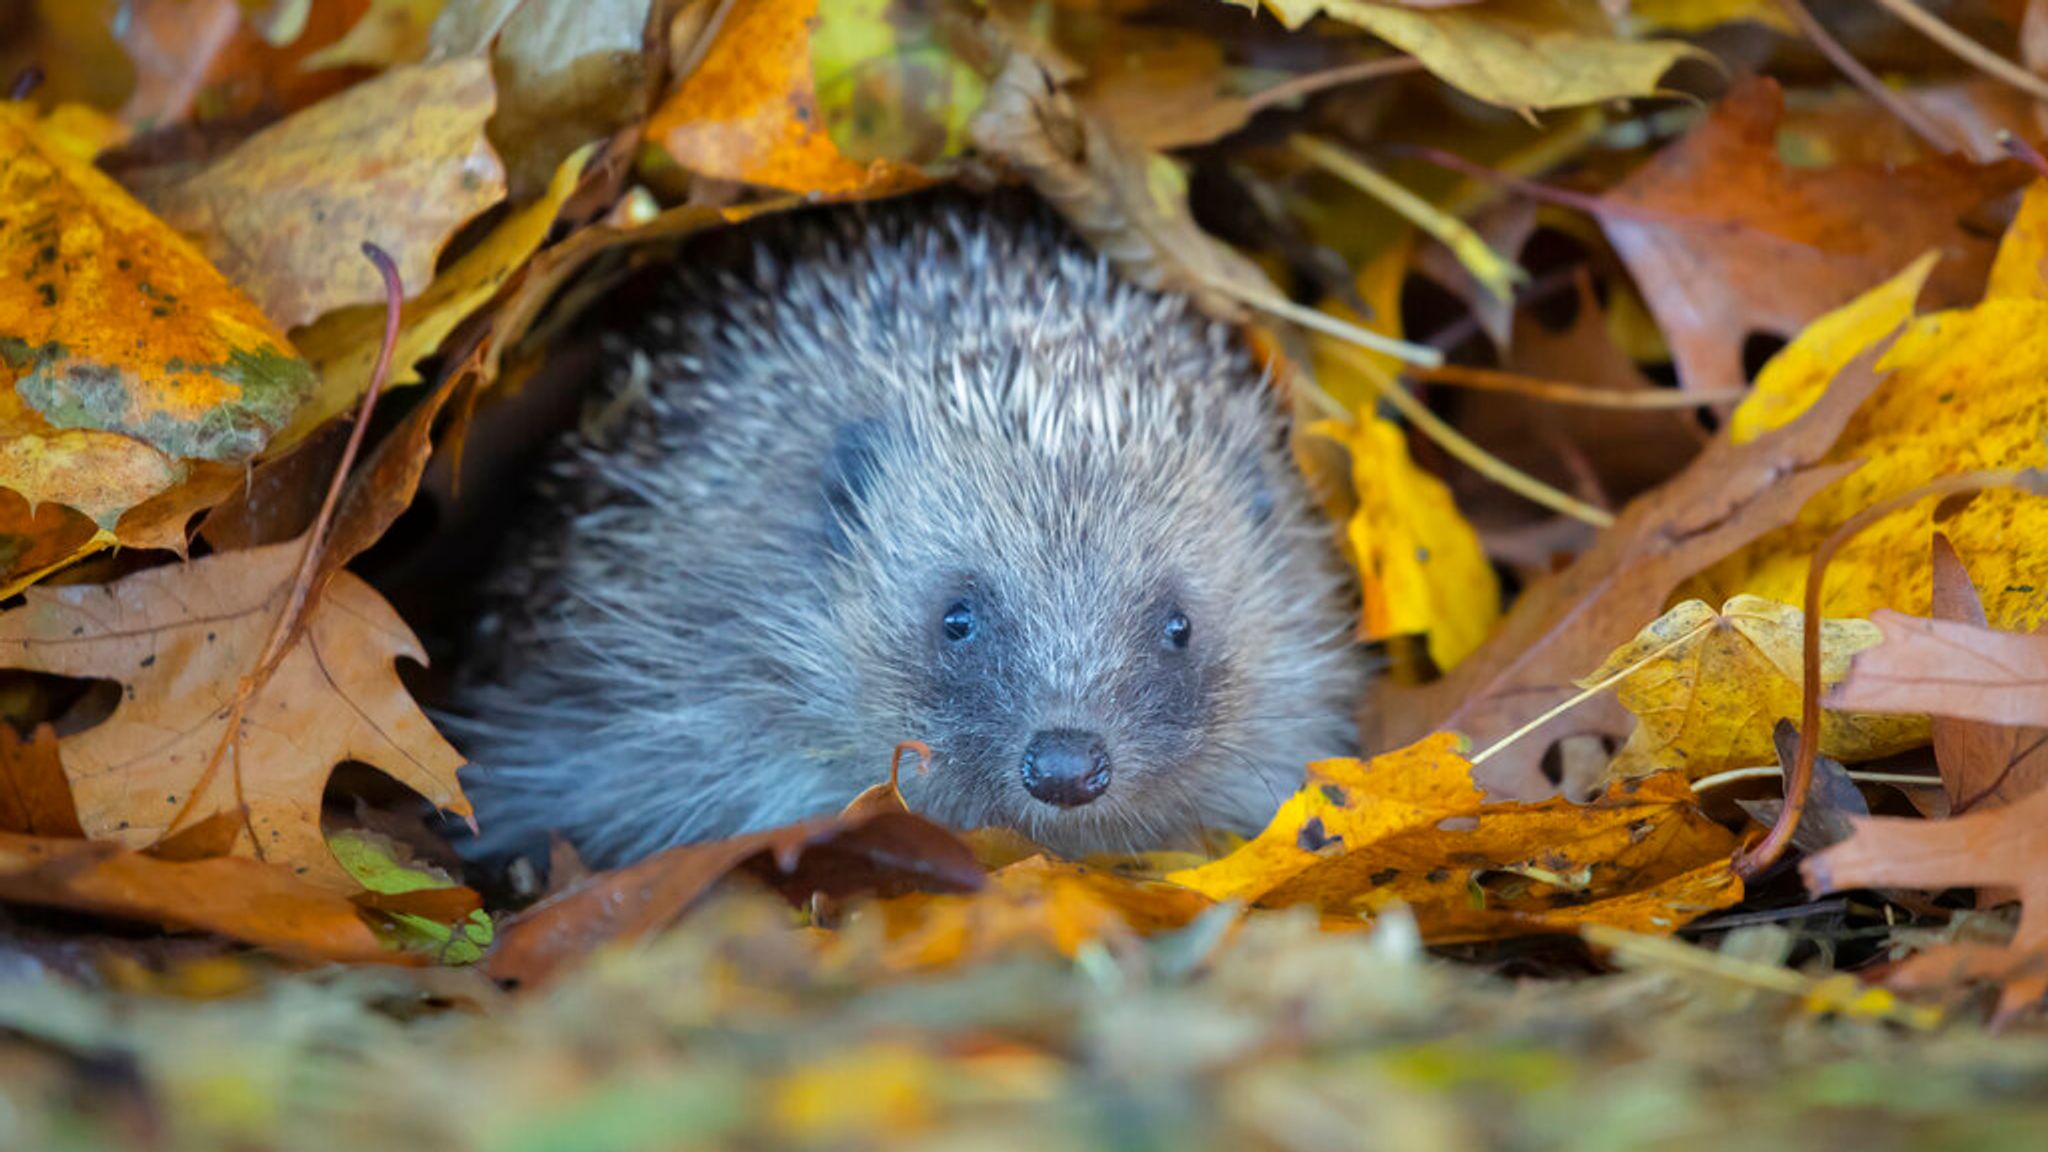 Hedgehogs facing new threats in our gardens | News UK Video News | Sky News